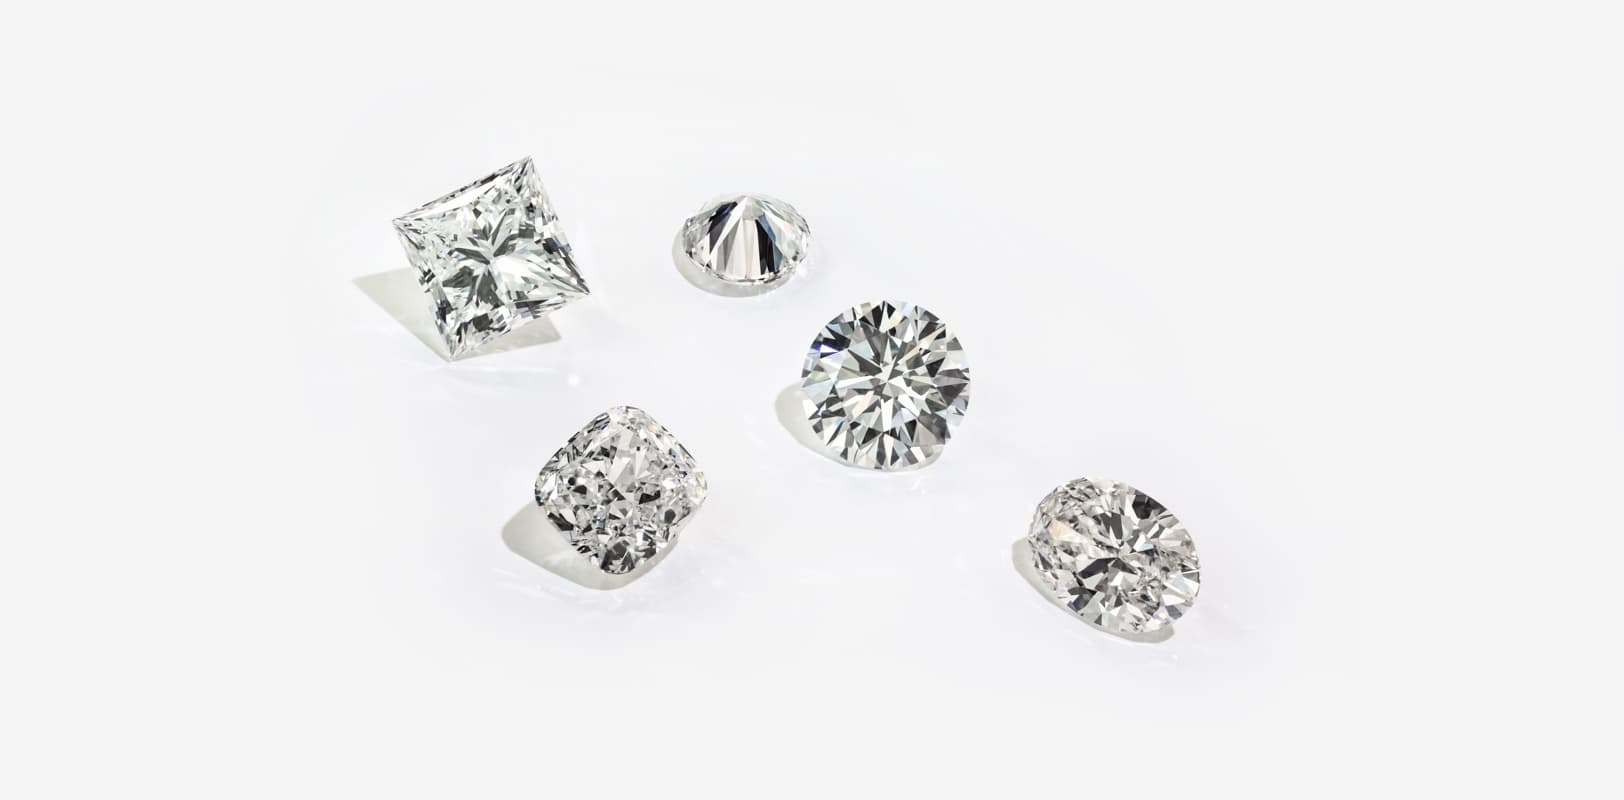 loose-lab-grown-diamonds (1)